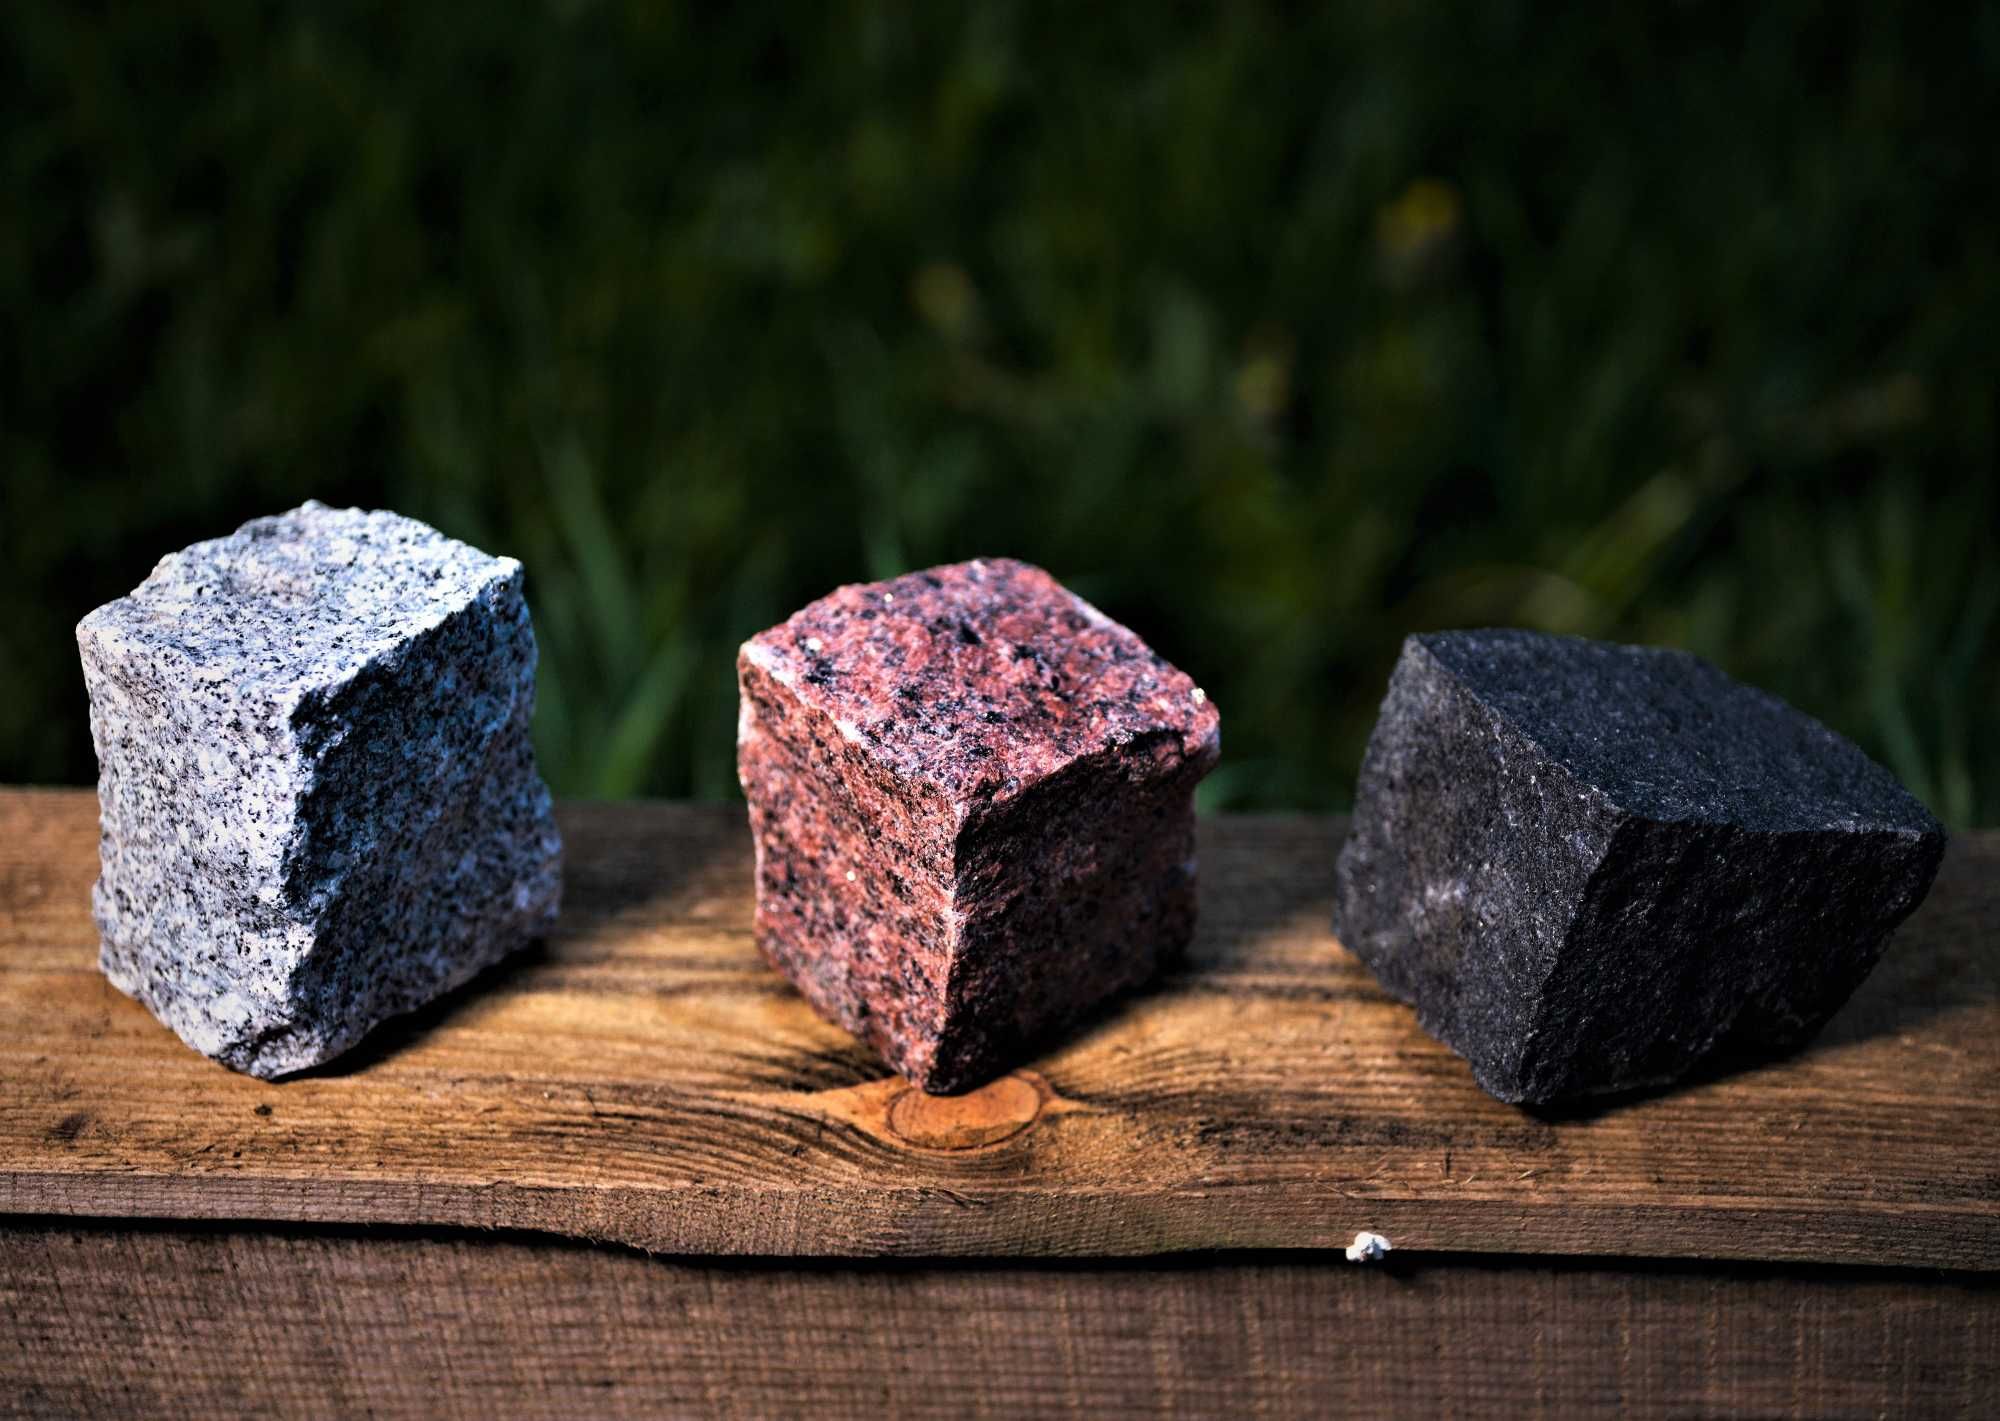 Kostka Granitowa | Granit | VANGA SZWED STRZEGOM